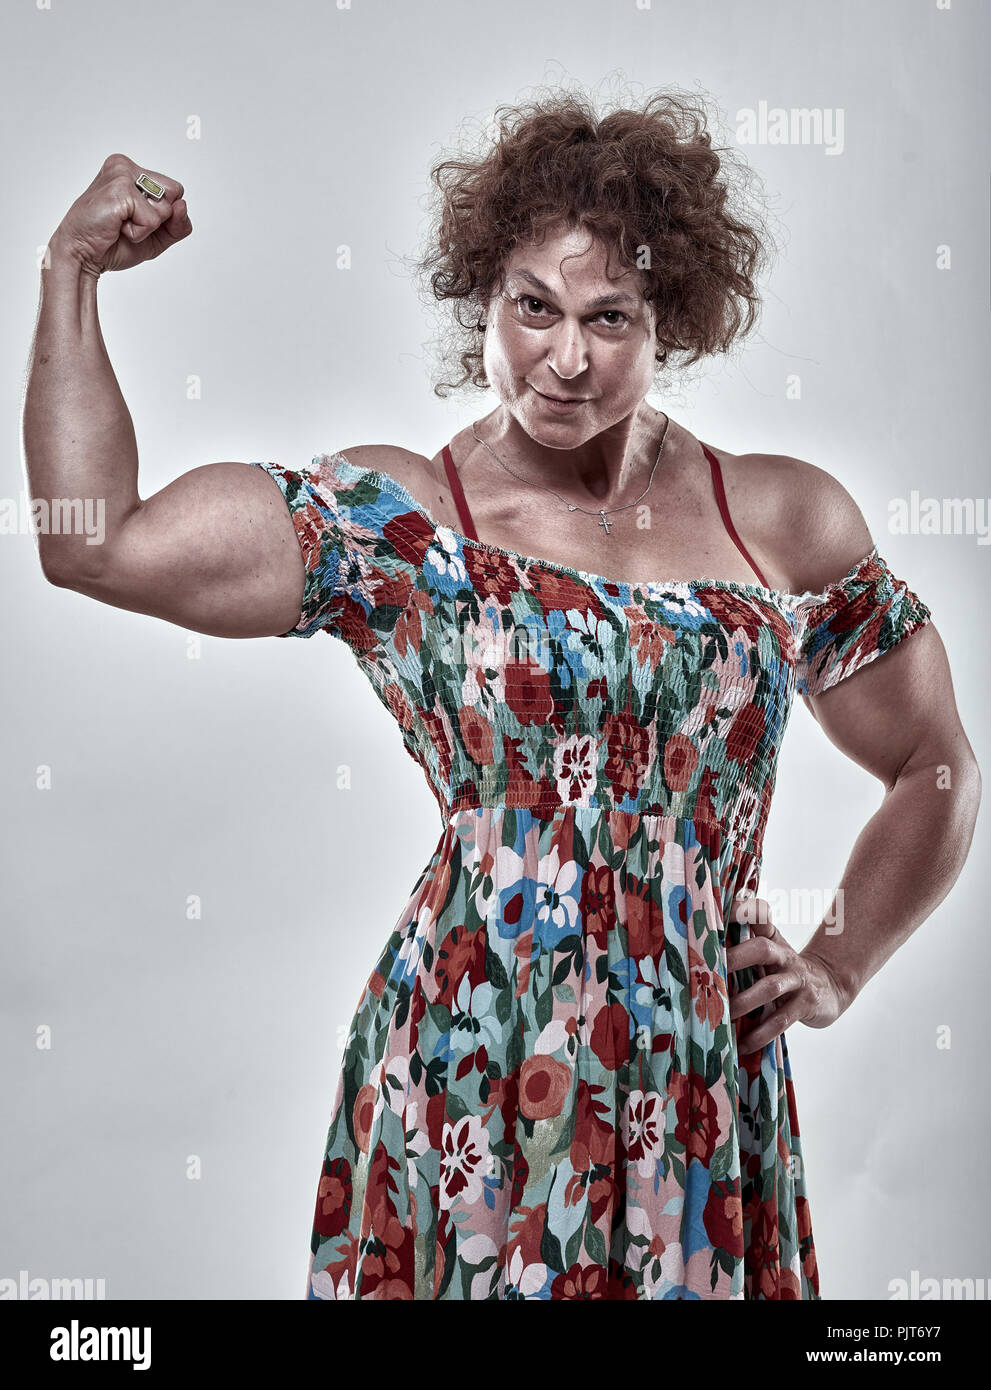 Girls power metaphor with muscular mature woman flexing biceps Stock Photo